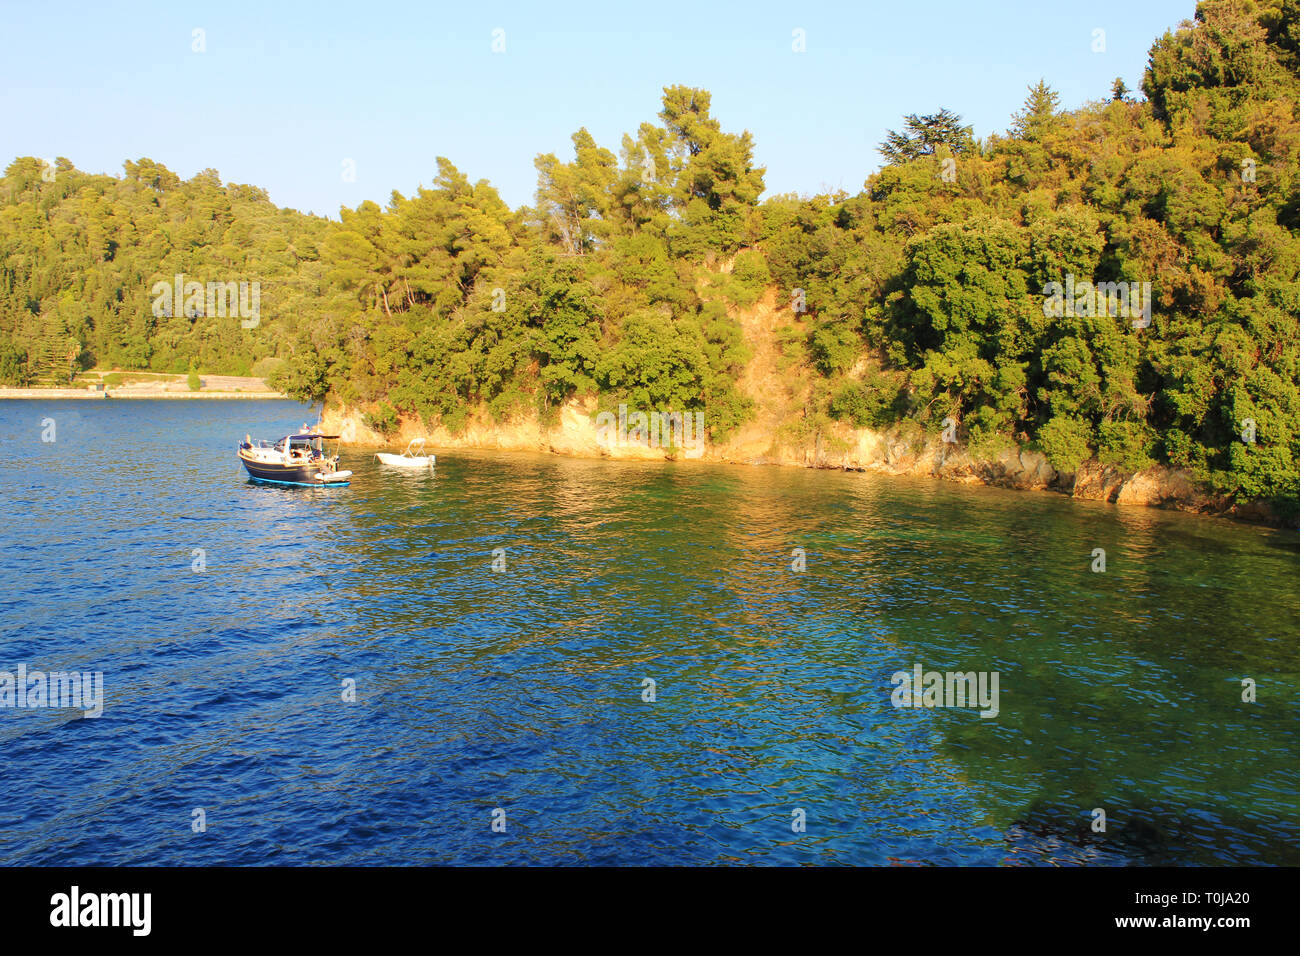 Wunderschöne Insel Scorpios (Ionisches Meer), von Onassis in Familienbesitz. Stockfoto